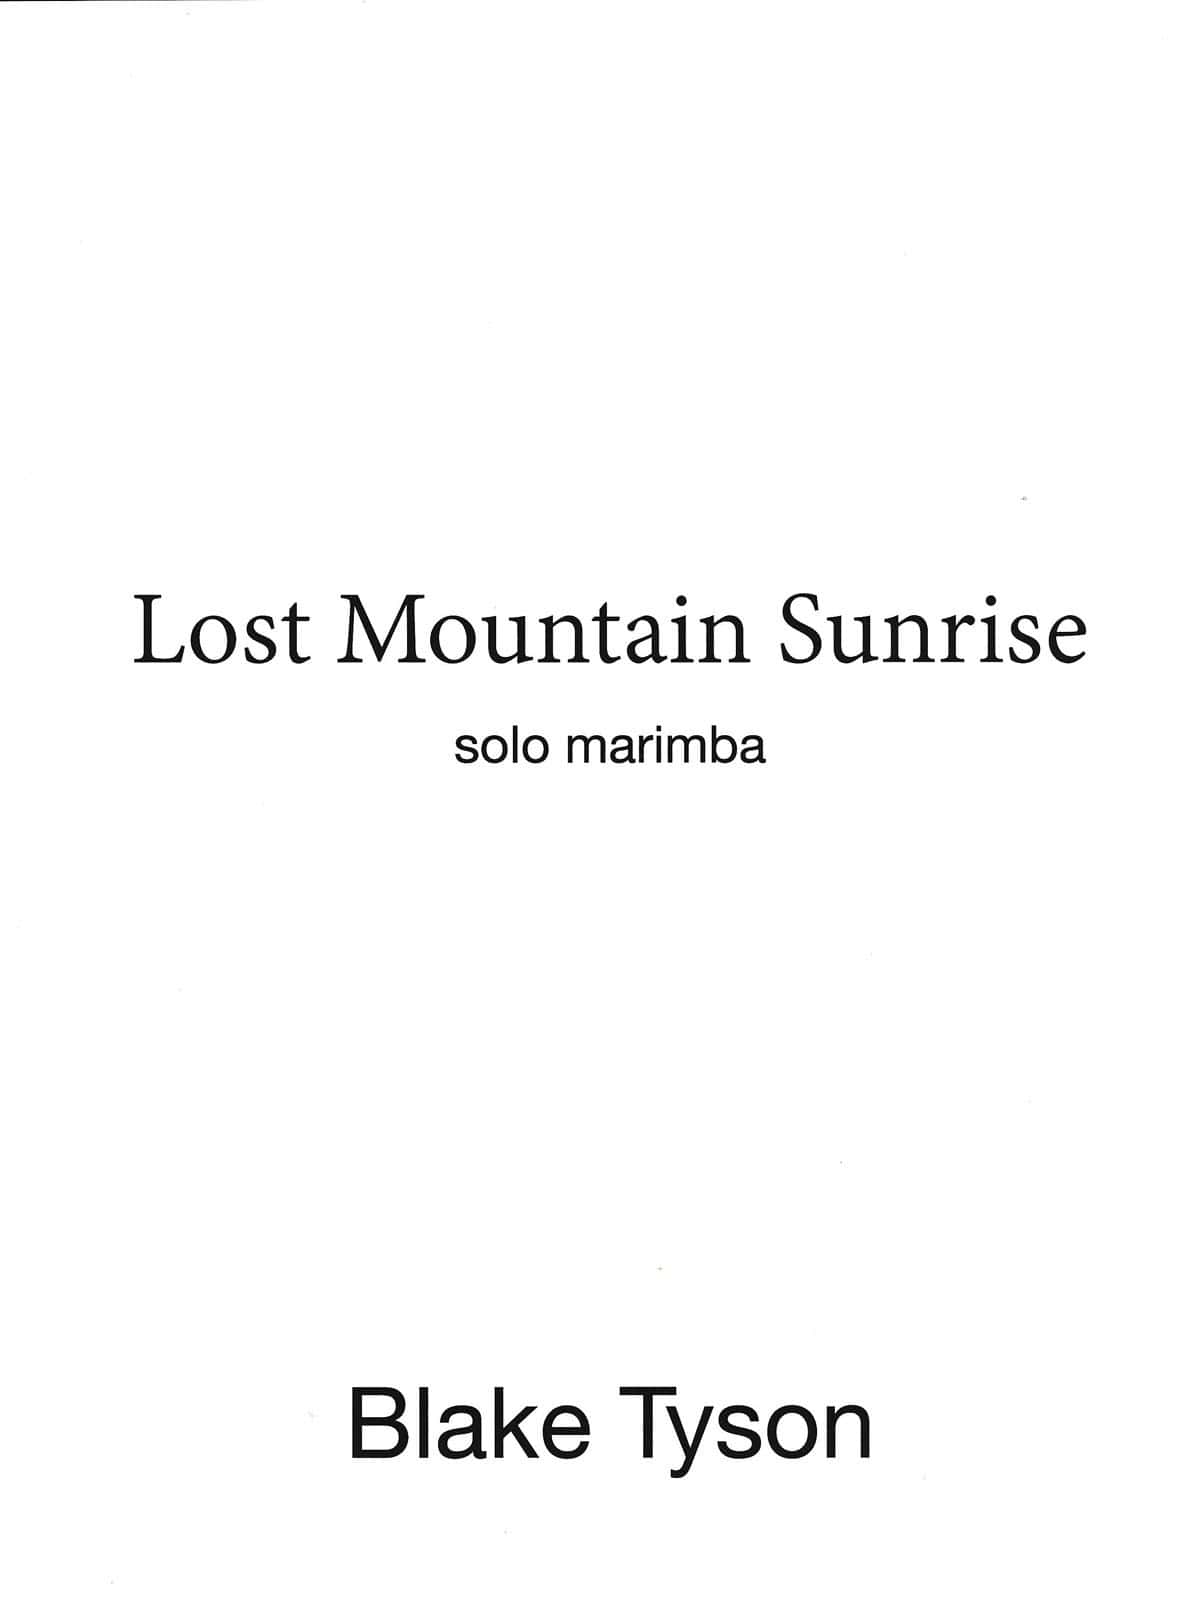 Lost Mountain Sunrise by Blake Tyson